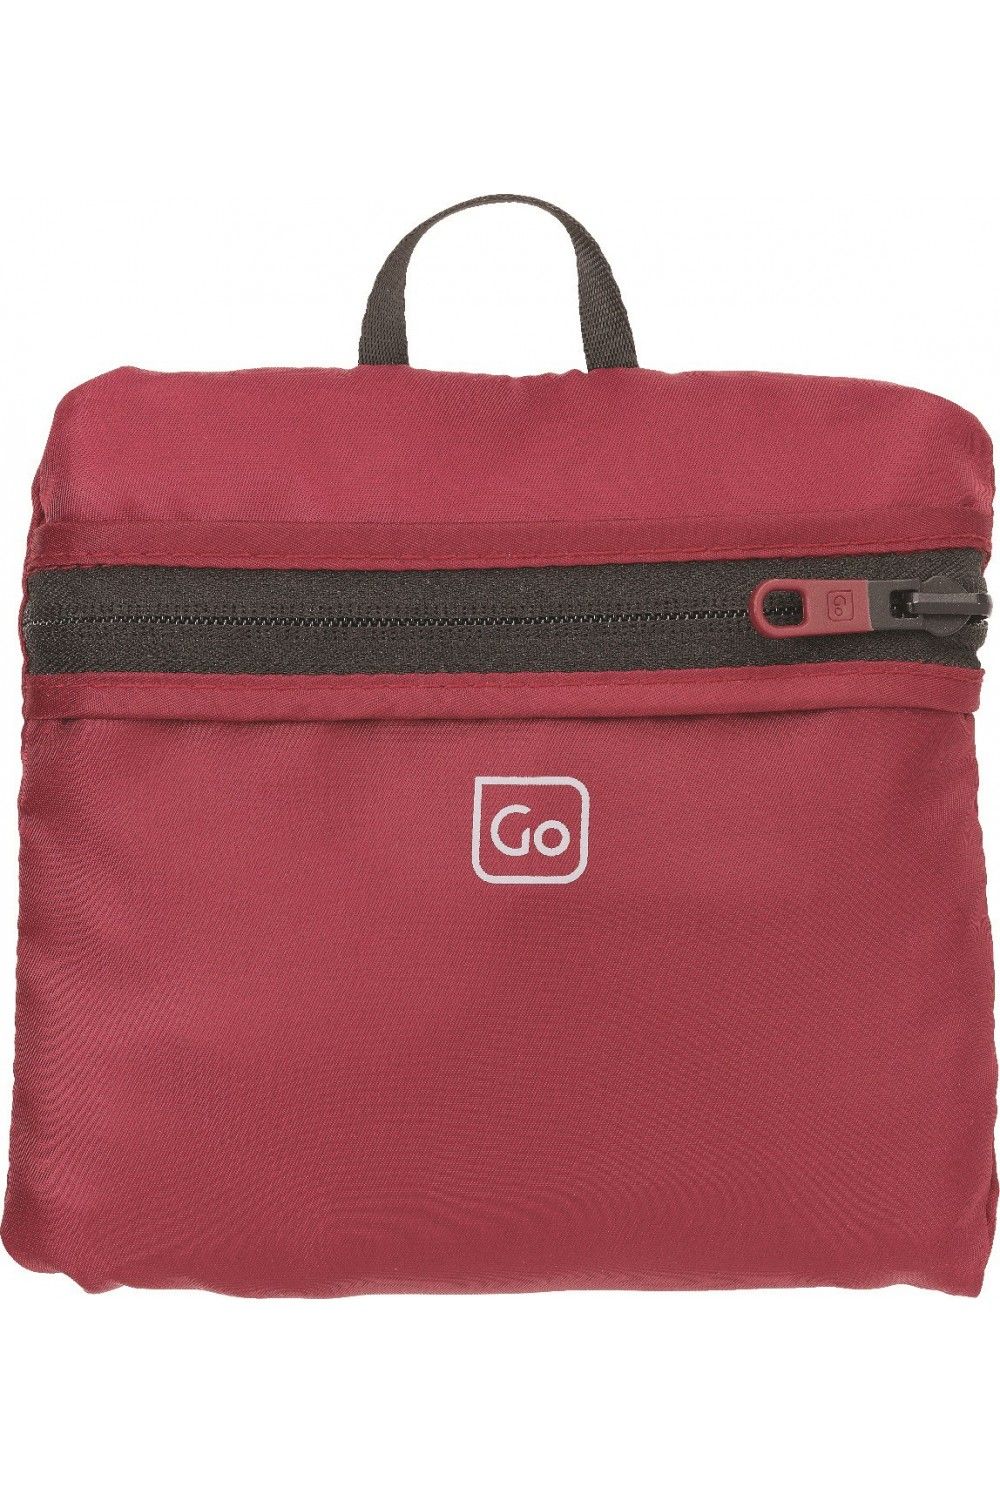 Go Travel Xtra Foldable Backpack